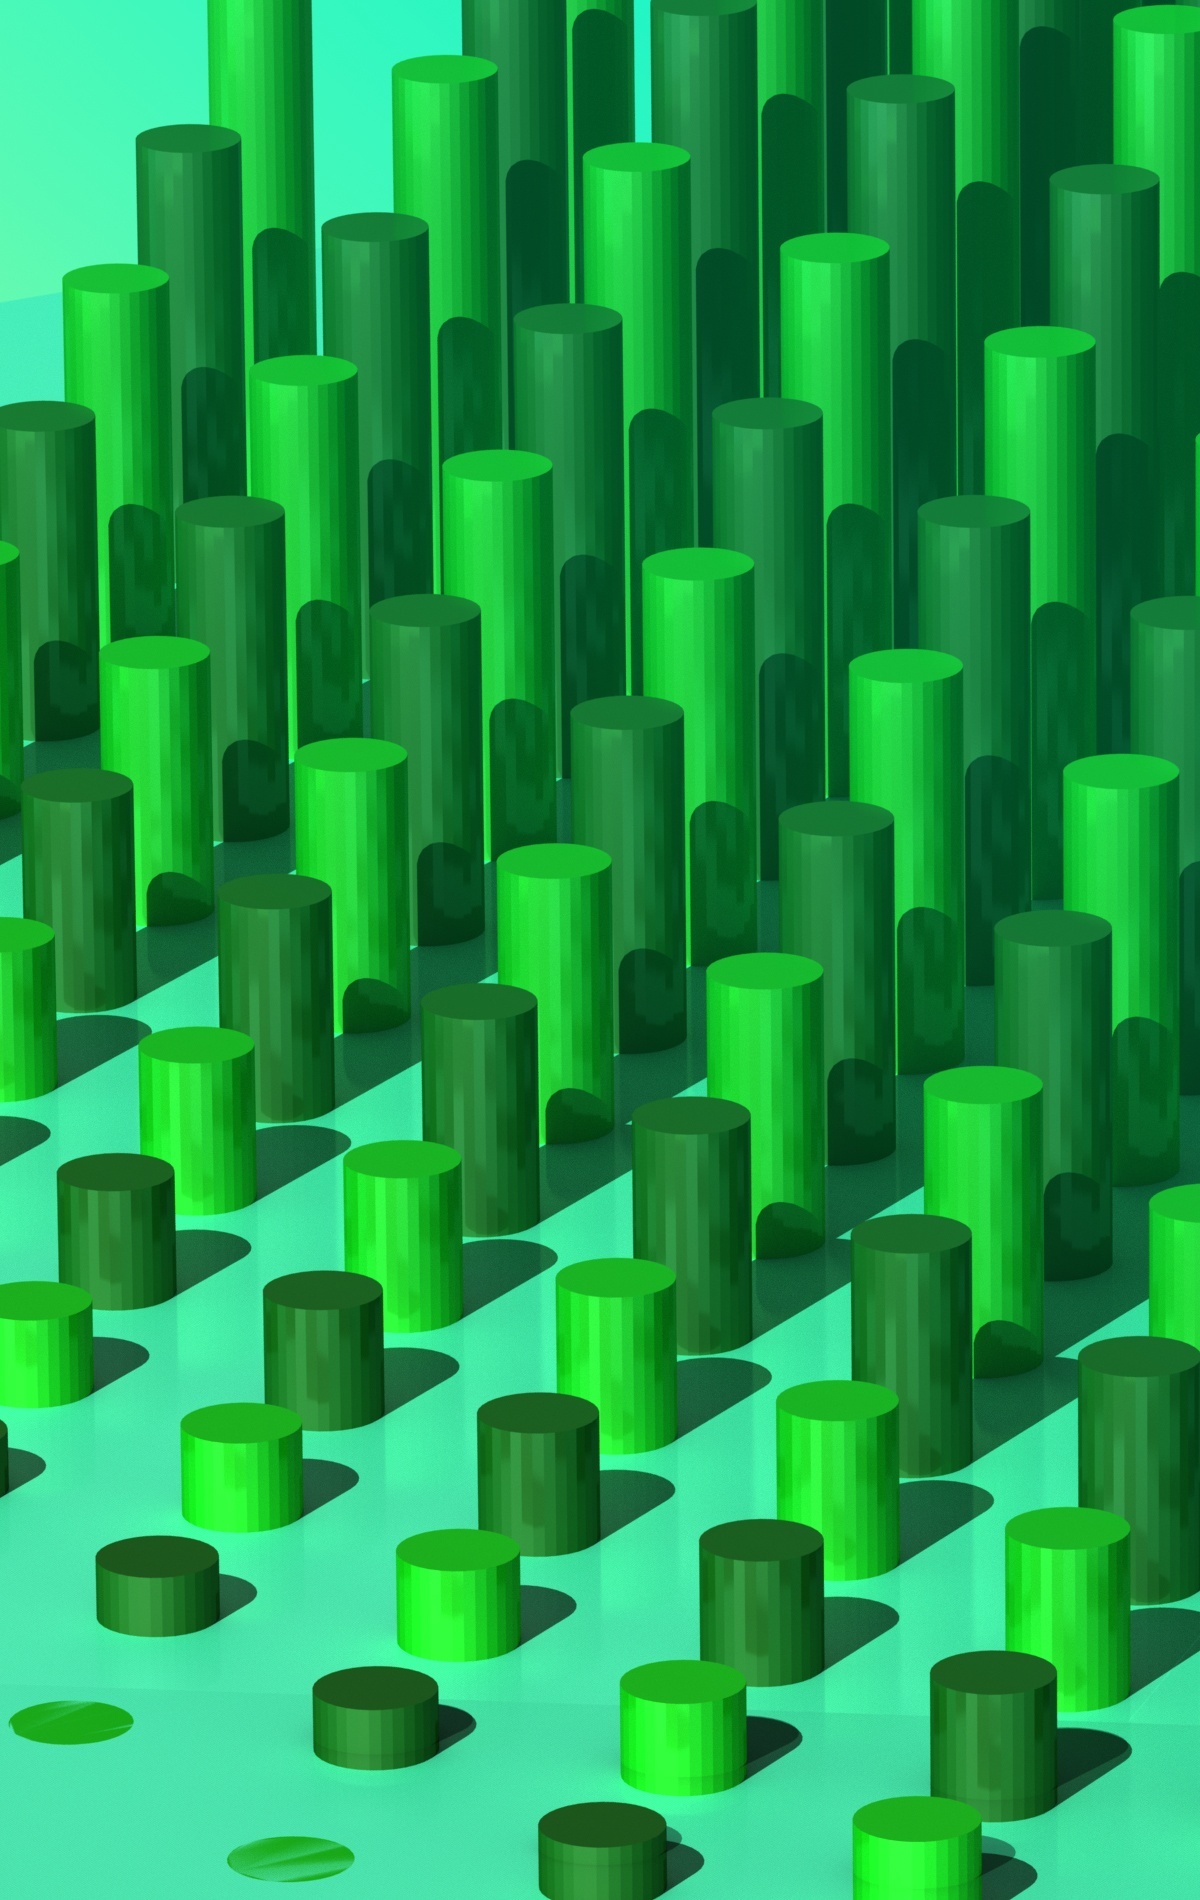 Coloured render of regular pattern of three-dimensional cylinders increasing in height